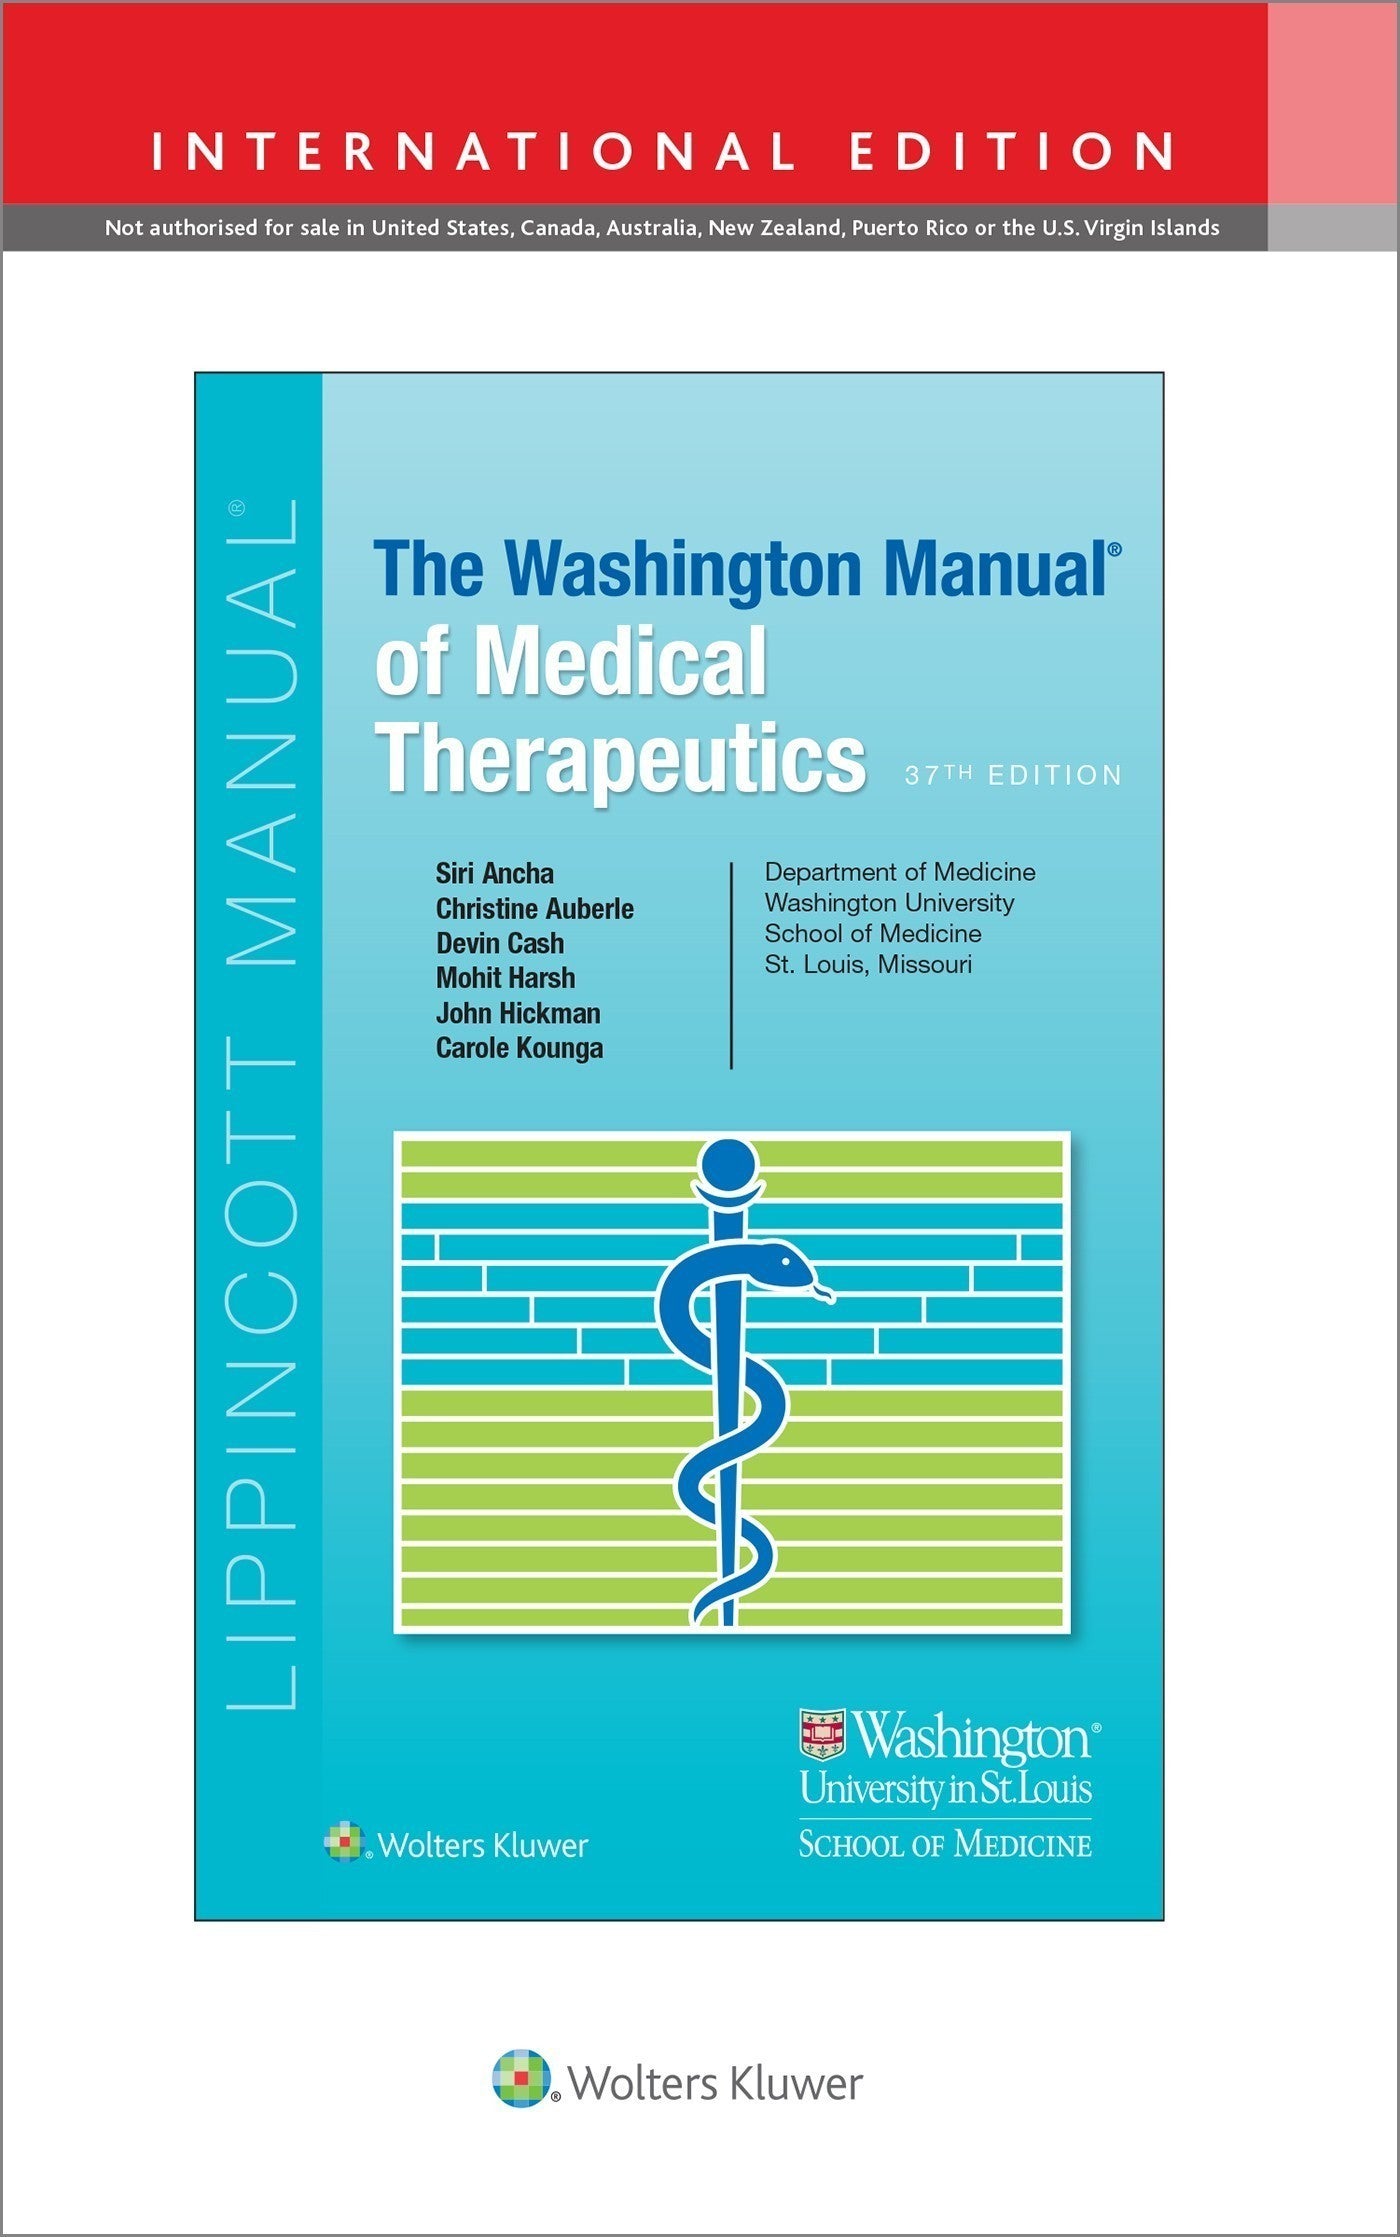 The Washington Manual of Medical Therapeutics.